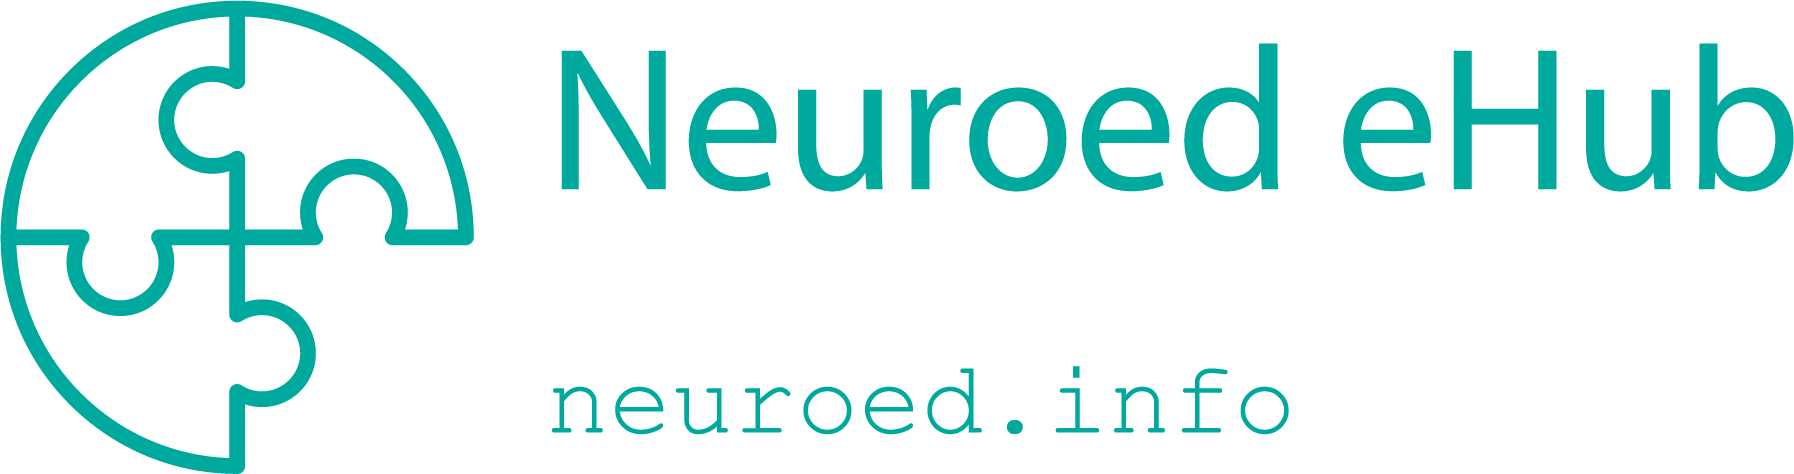 Neuroed eHub official Logo